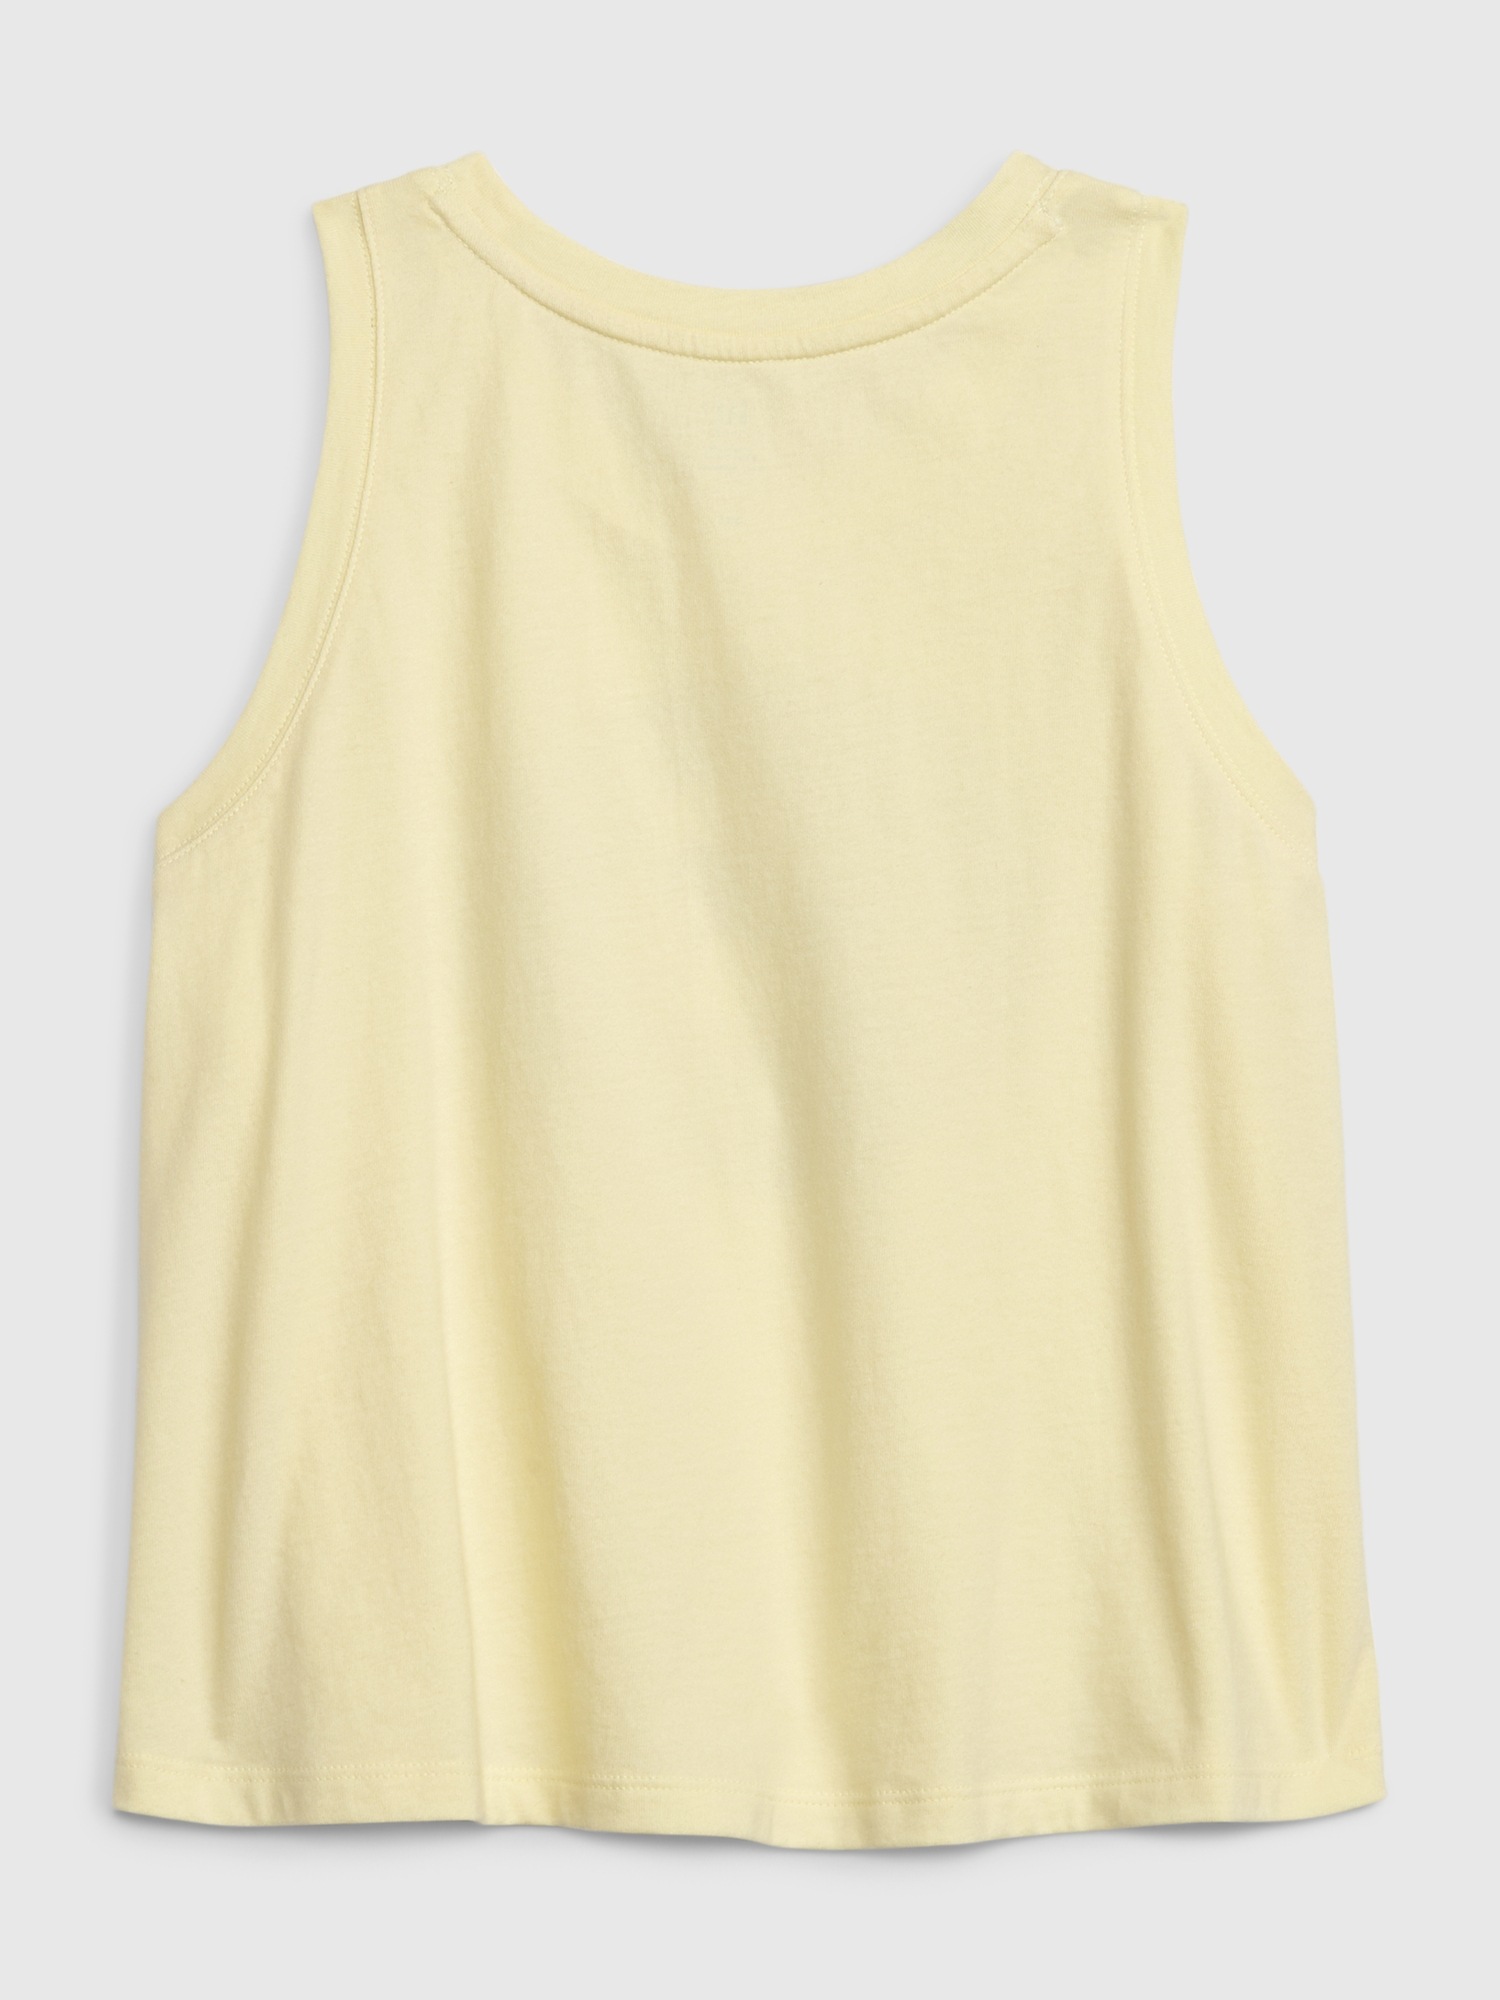 Gap Kids 100% cotton navy t-shirt / tank top, sharks, size 6-7, EUC –  DaisyChainClothing